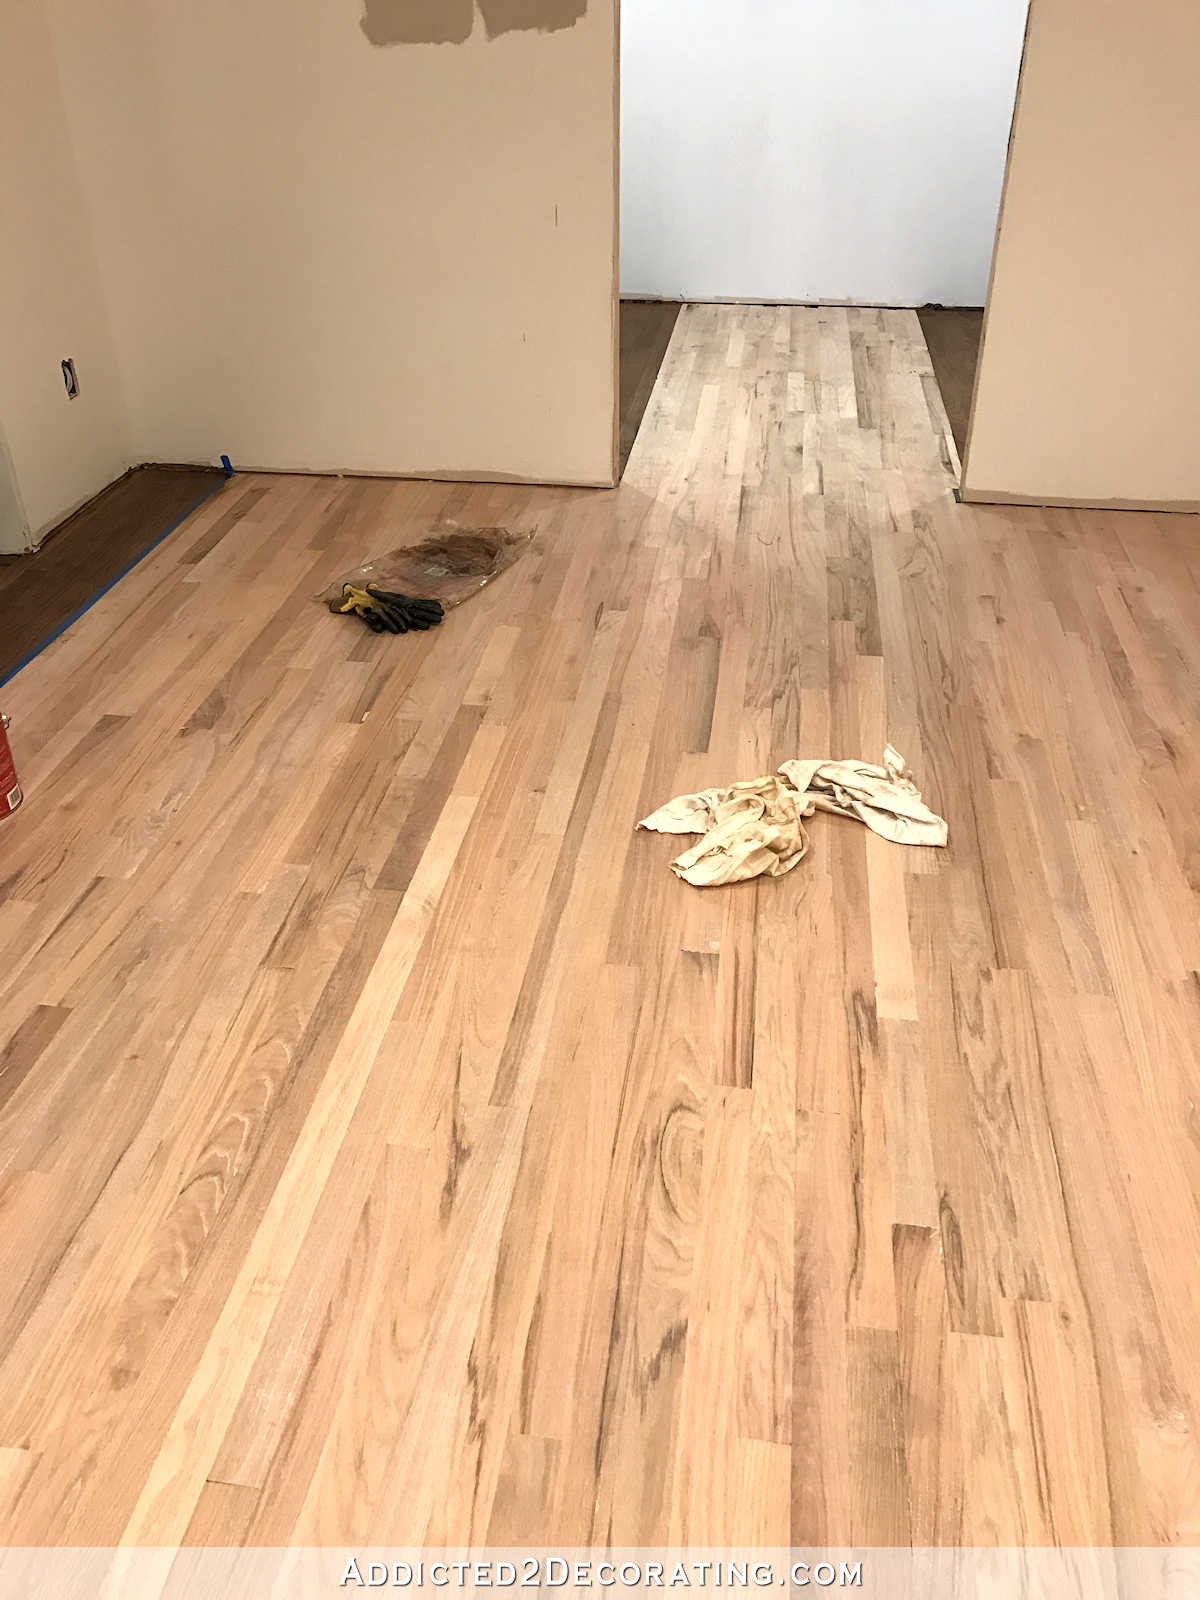 How To Change Hardwood Floor Color Mycoffeepot Org